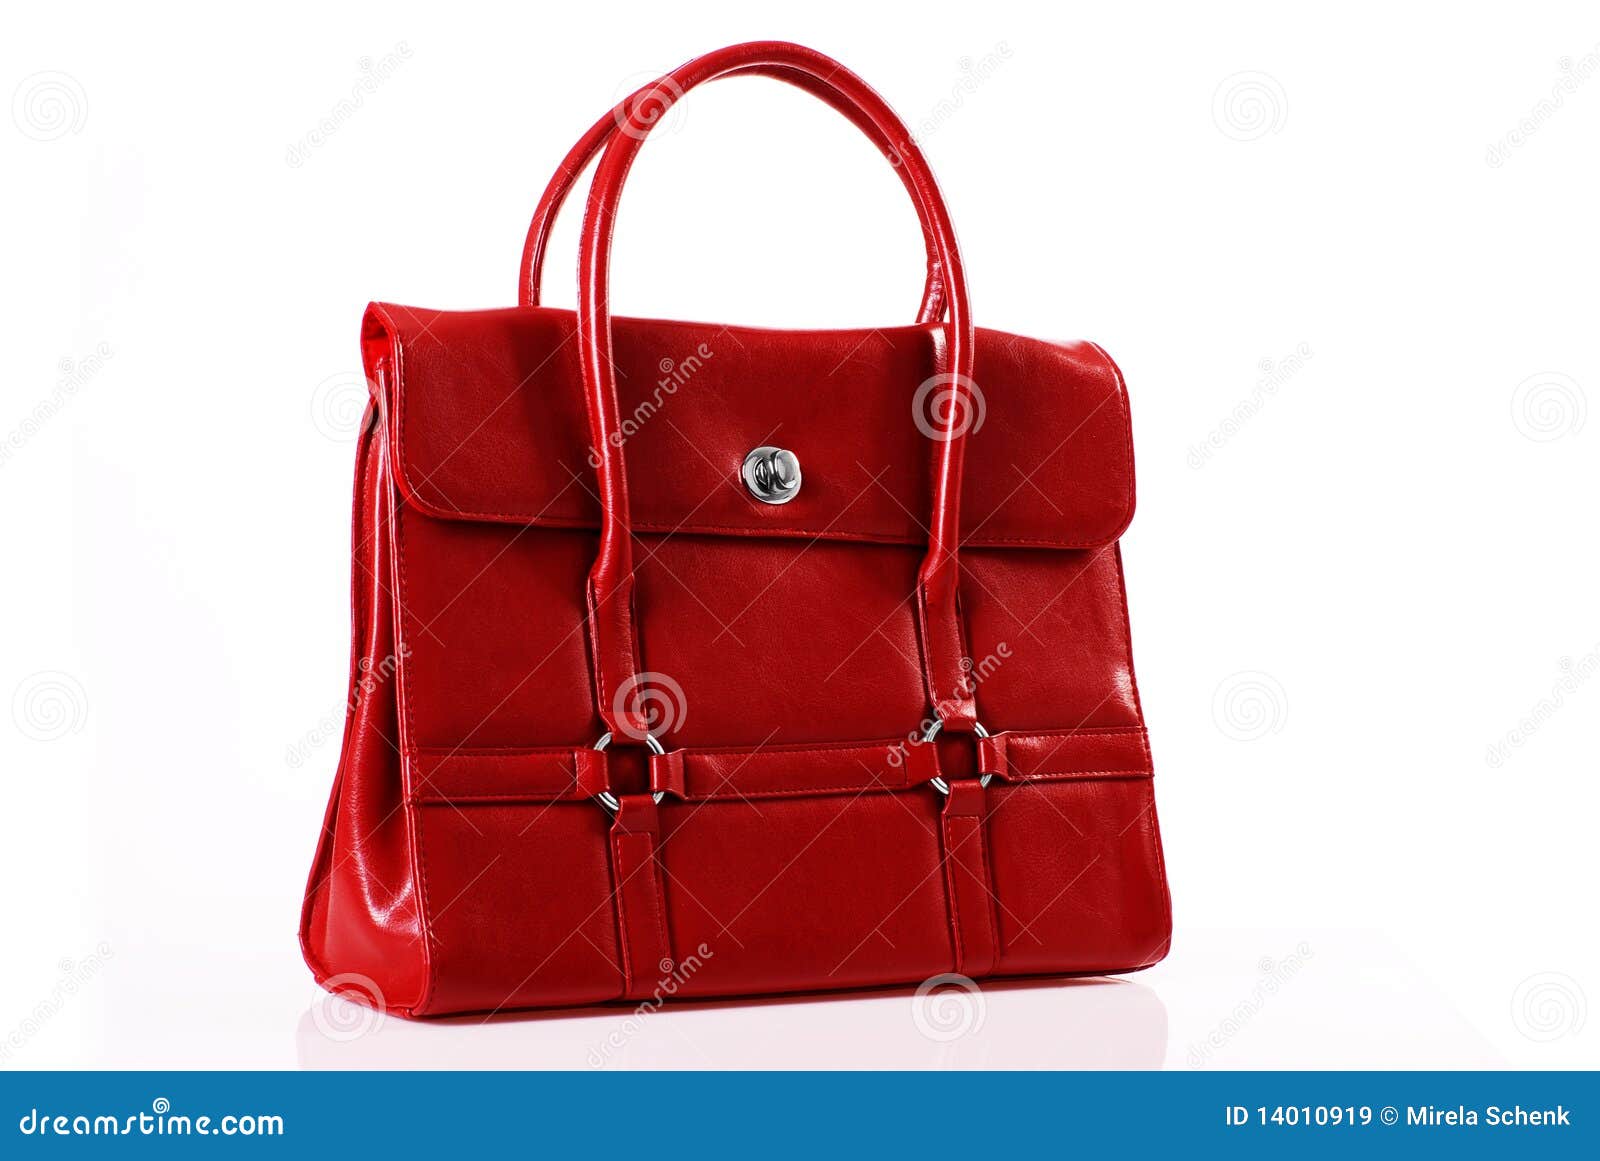 Red handbag. stock image. Image of object, background - 14010919